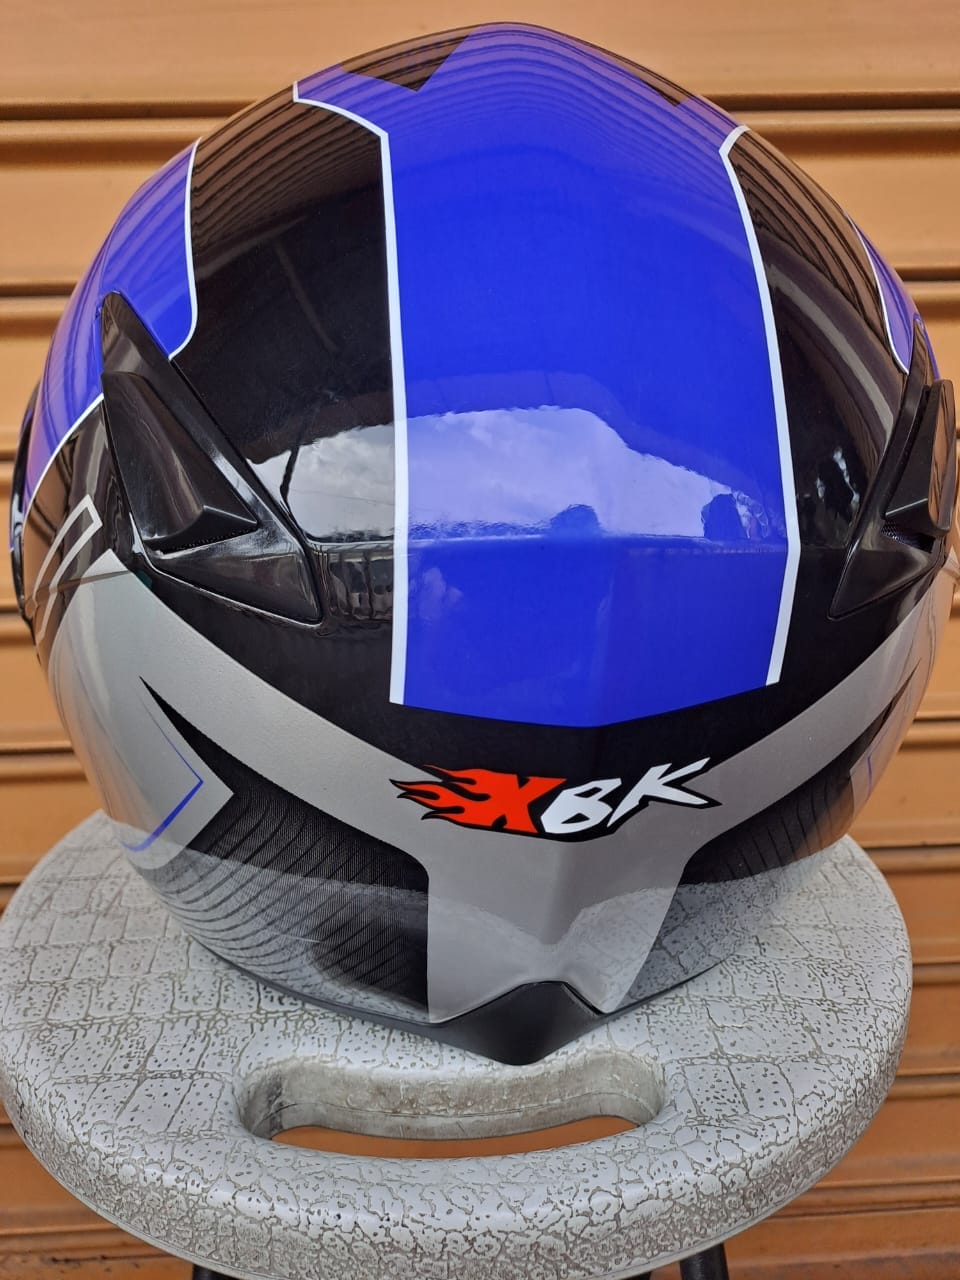 xbk modoular helmet1